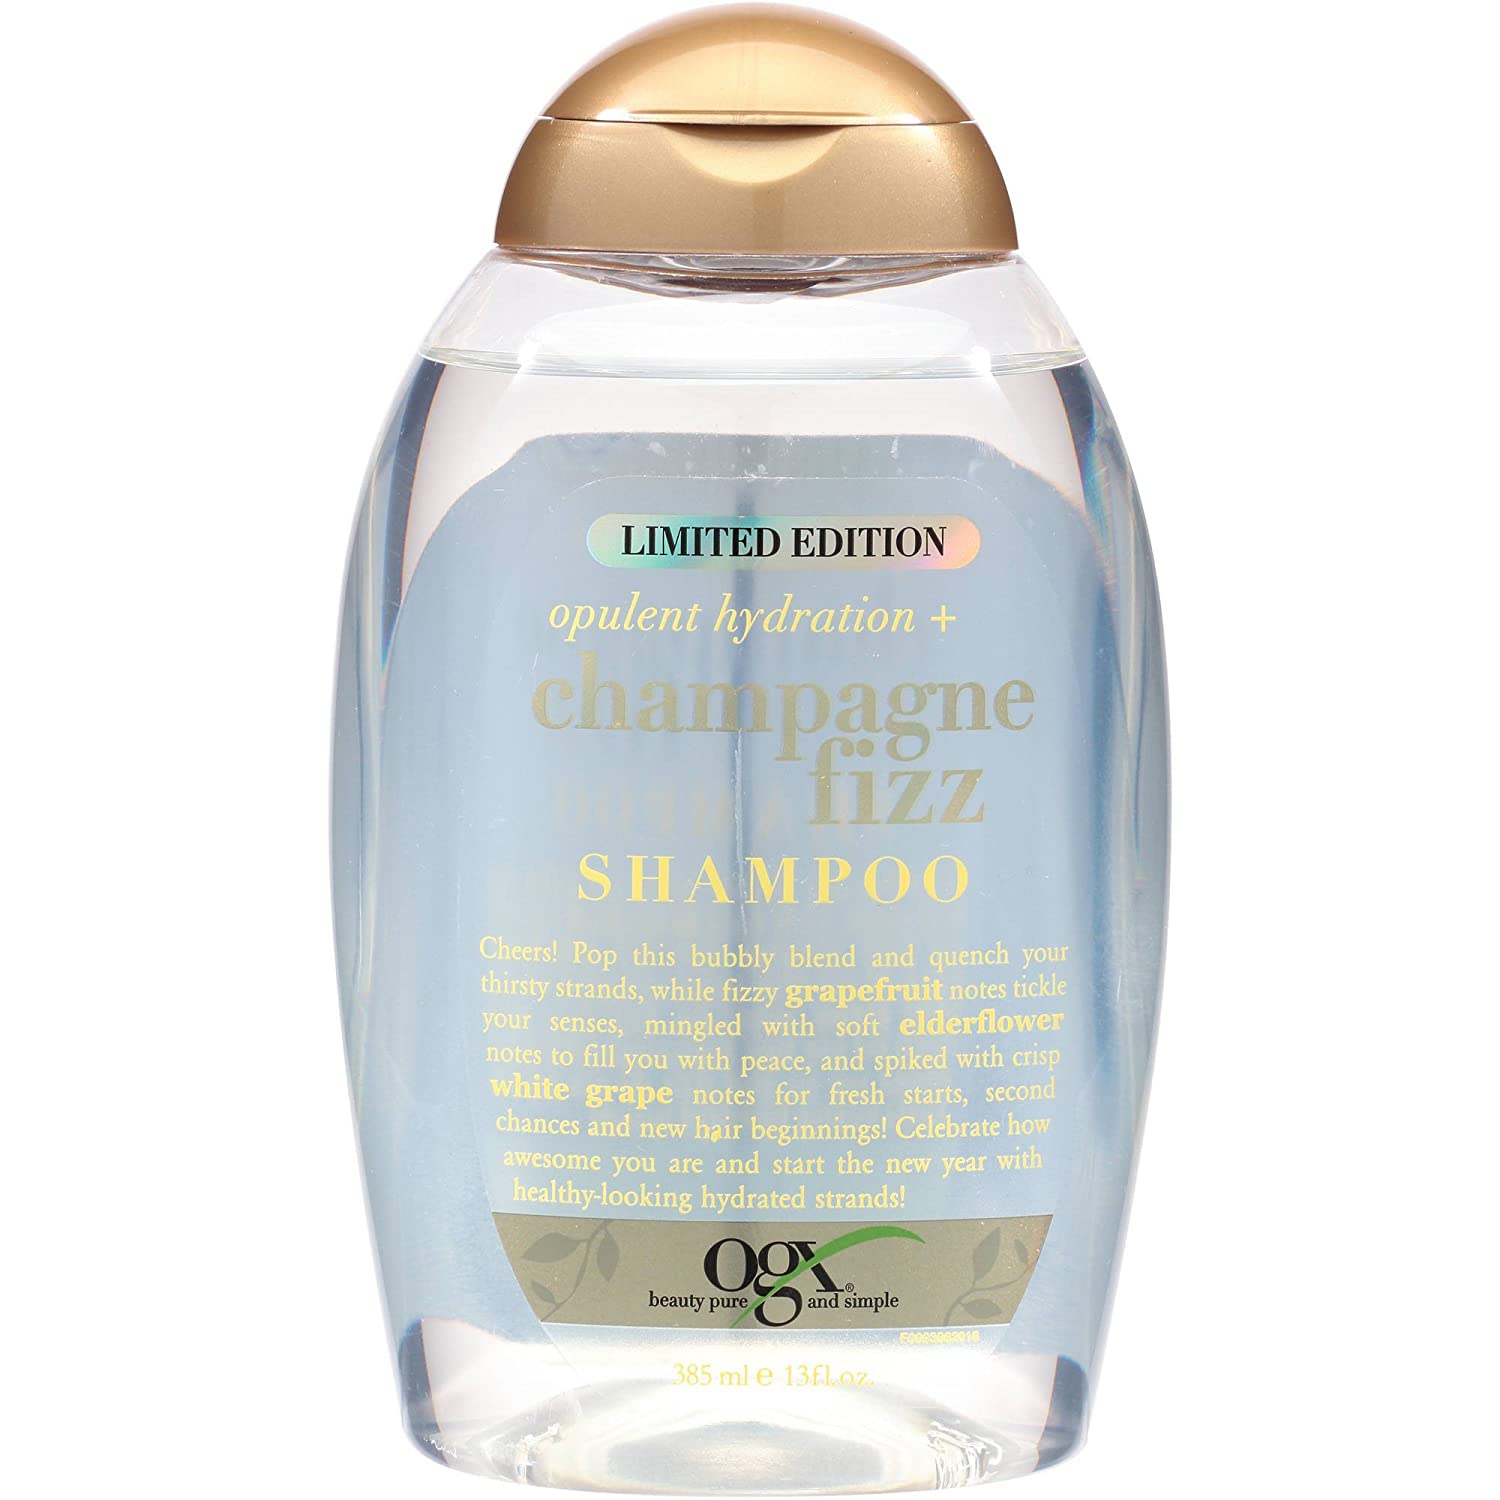 ogx® Opulent hydration Champagne Fizz Shampoo 385 ml.